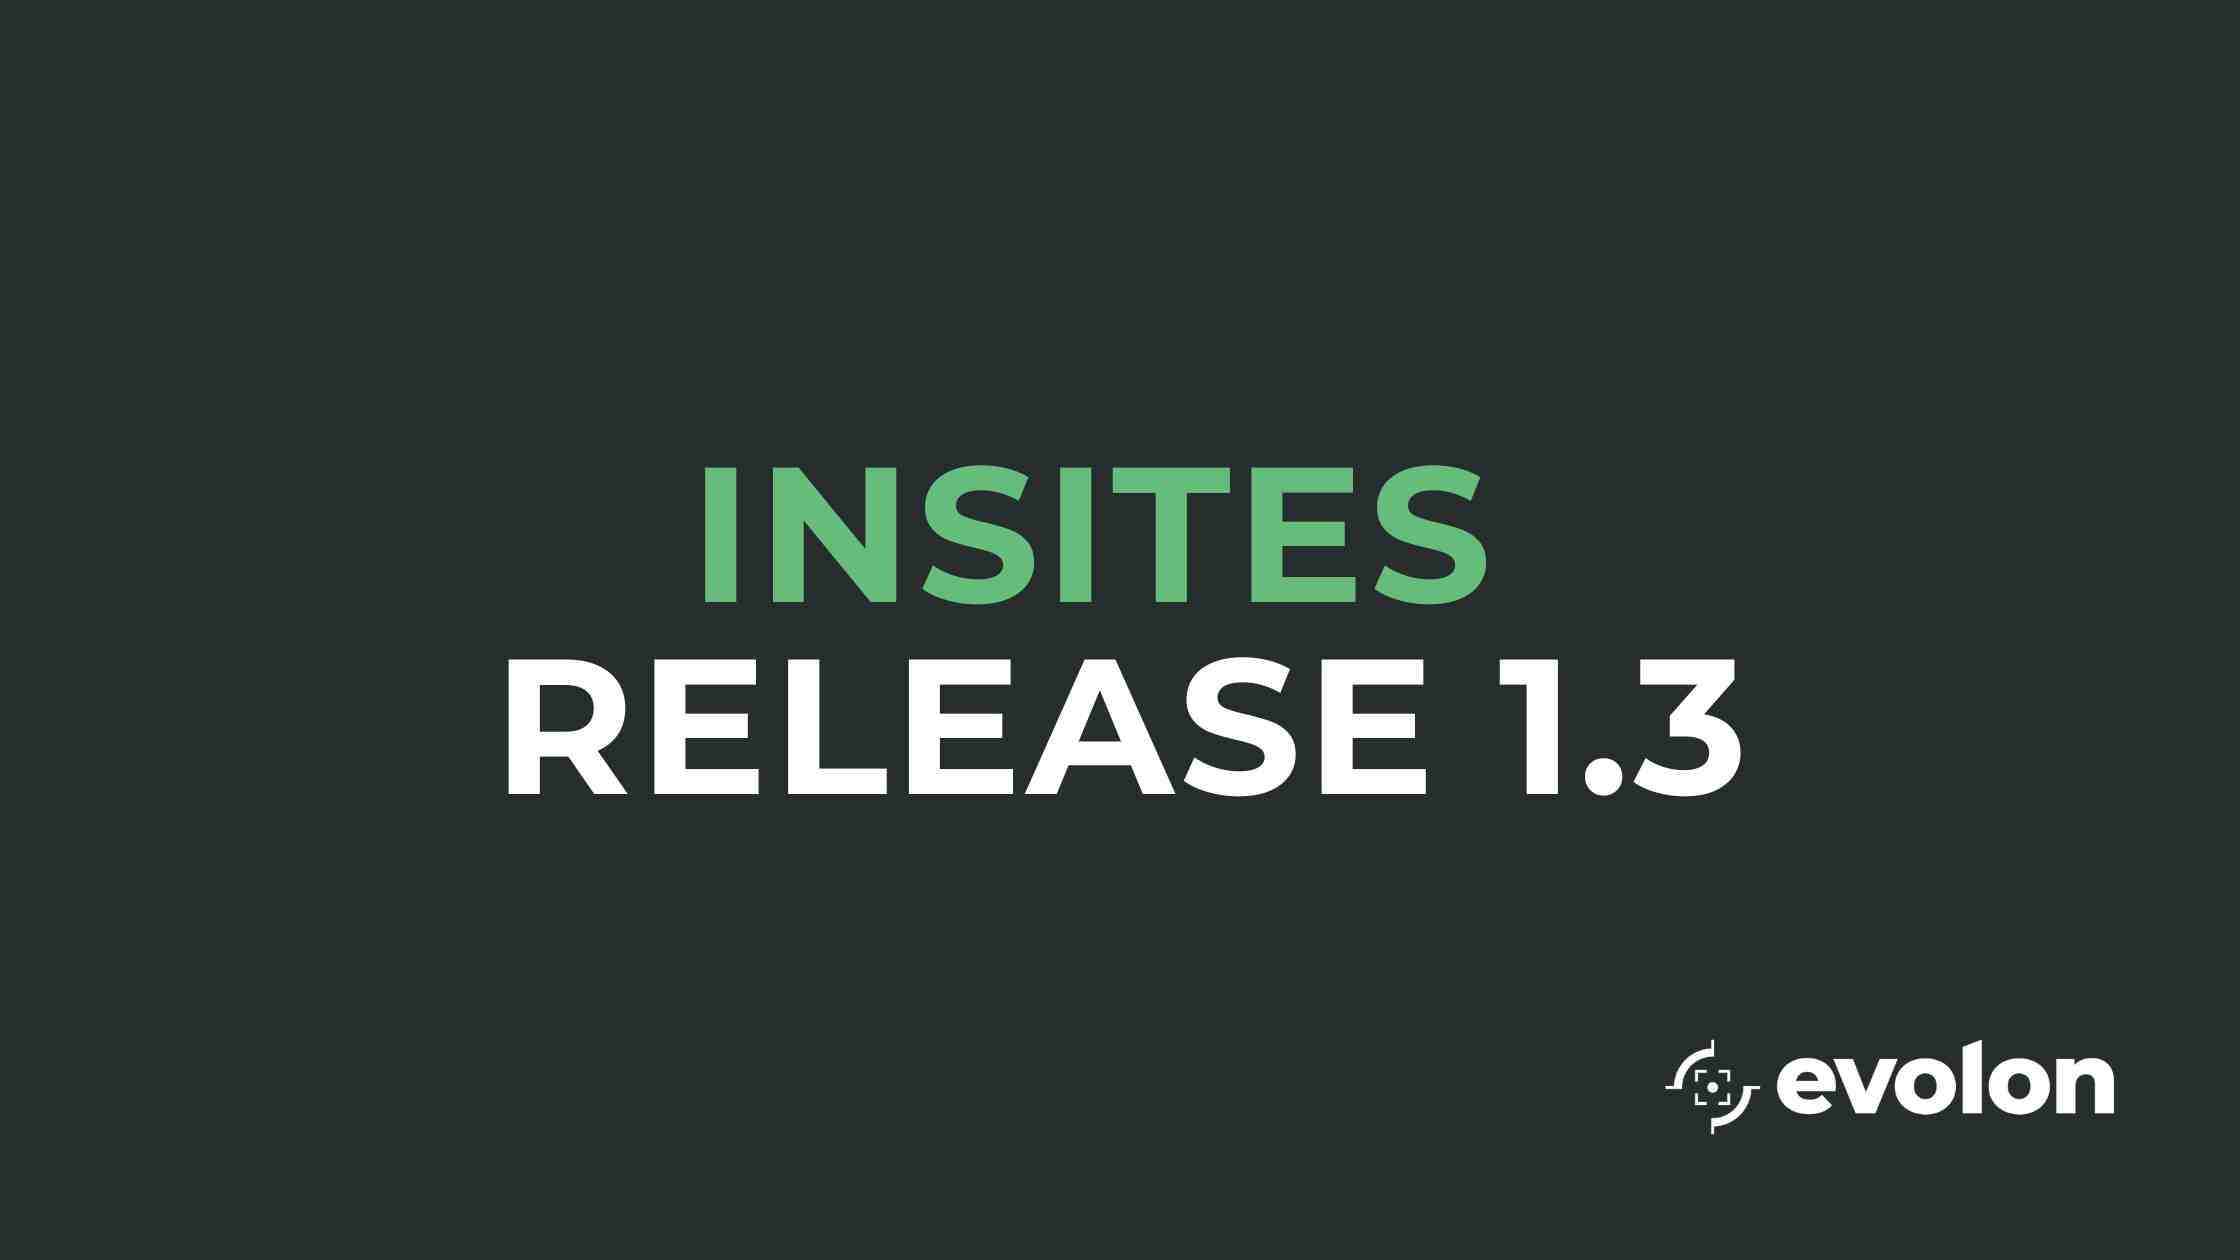 Insites Release Version 1.3